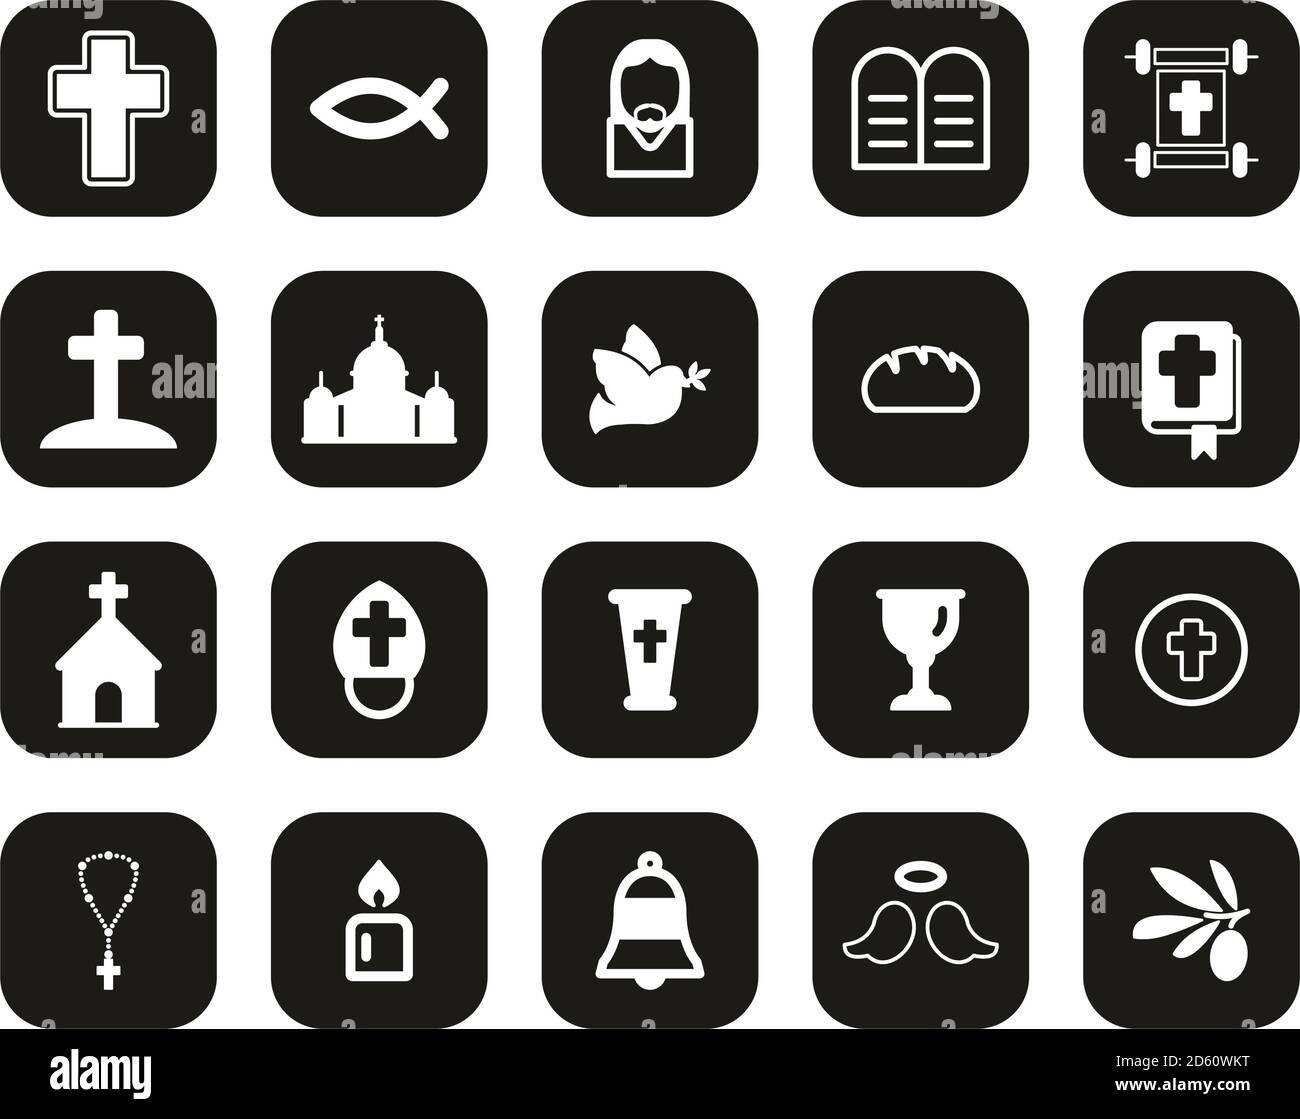 Christianity Religion & Religious Items Icons White On Black Flat Design Set Big Stock Vector